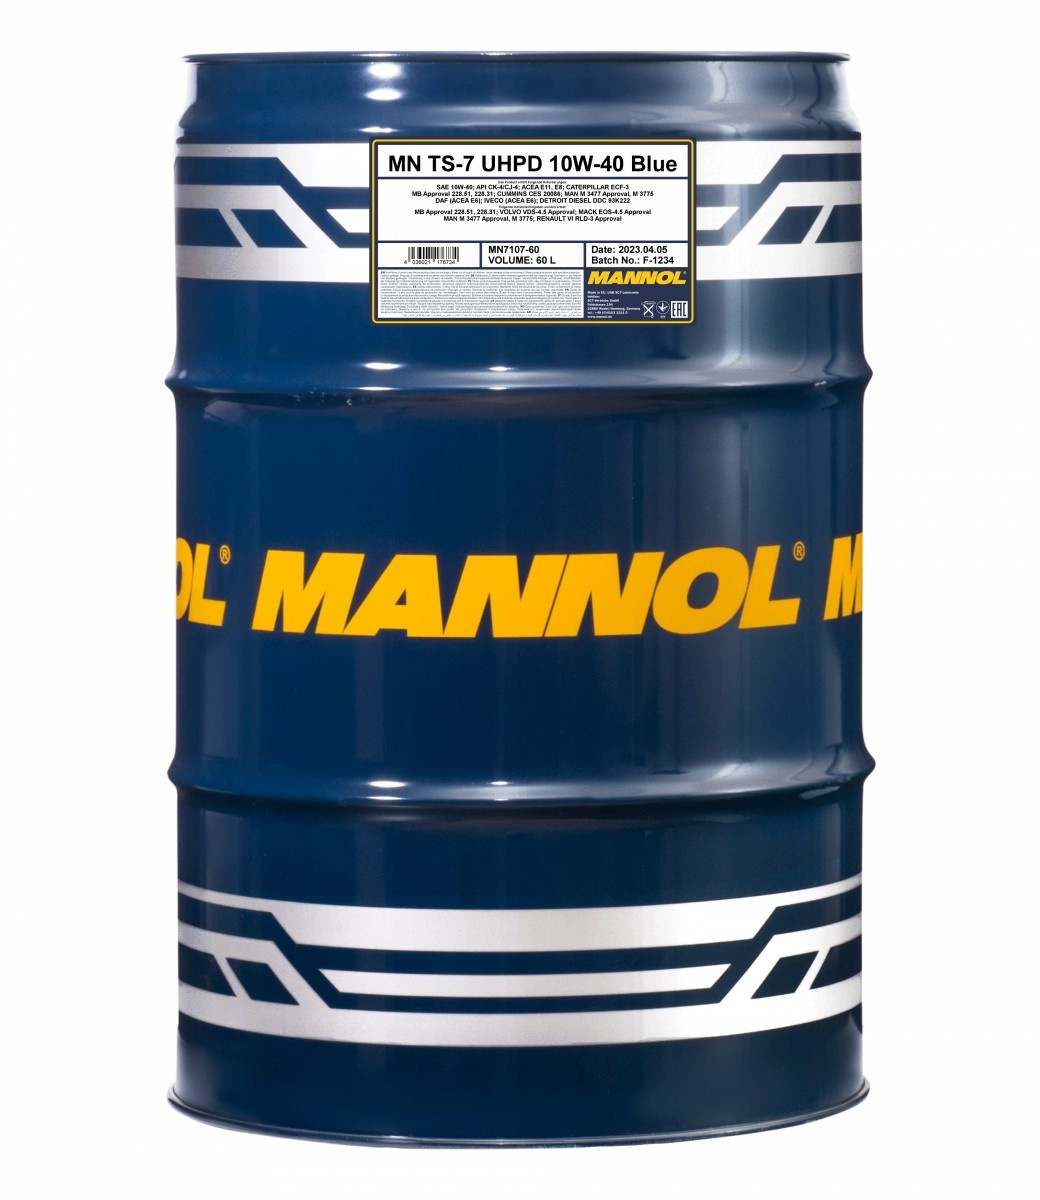 Ulei de motor Mannol TS-7 Blue UHPD 10W-40 7107 60L